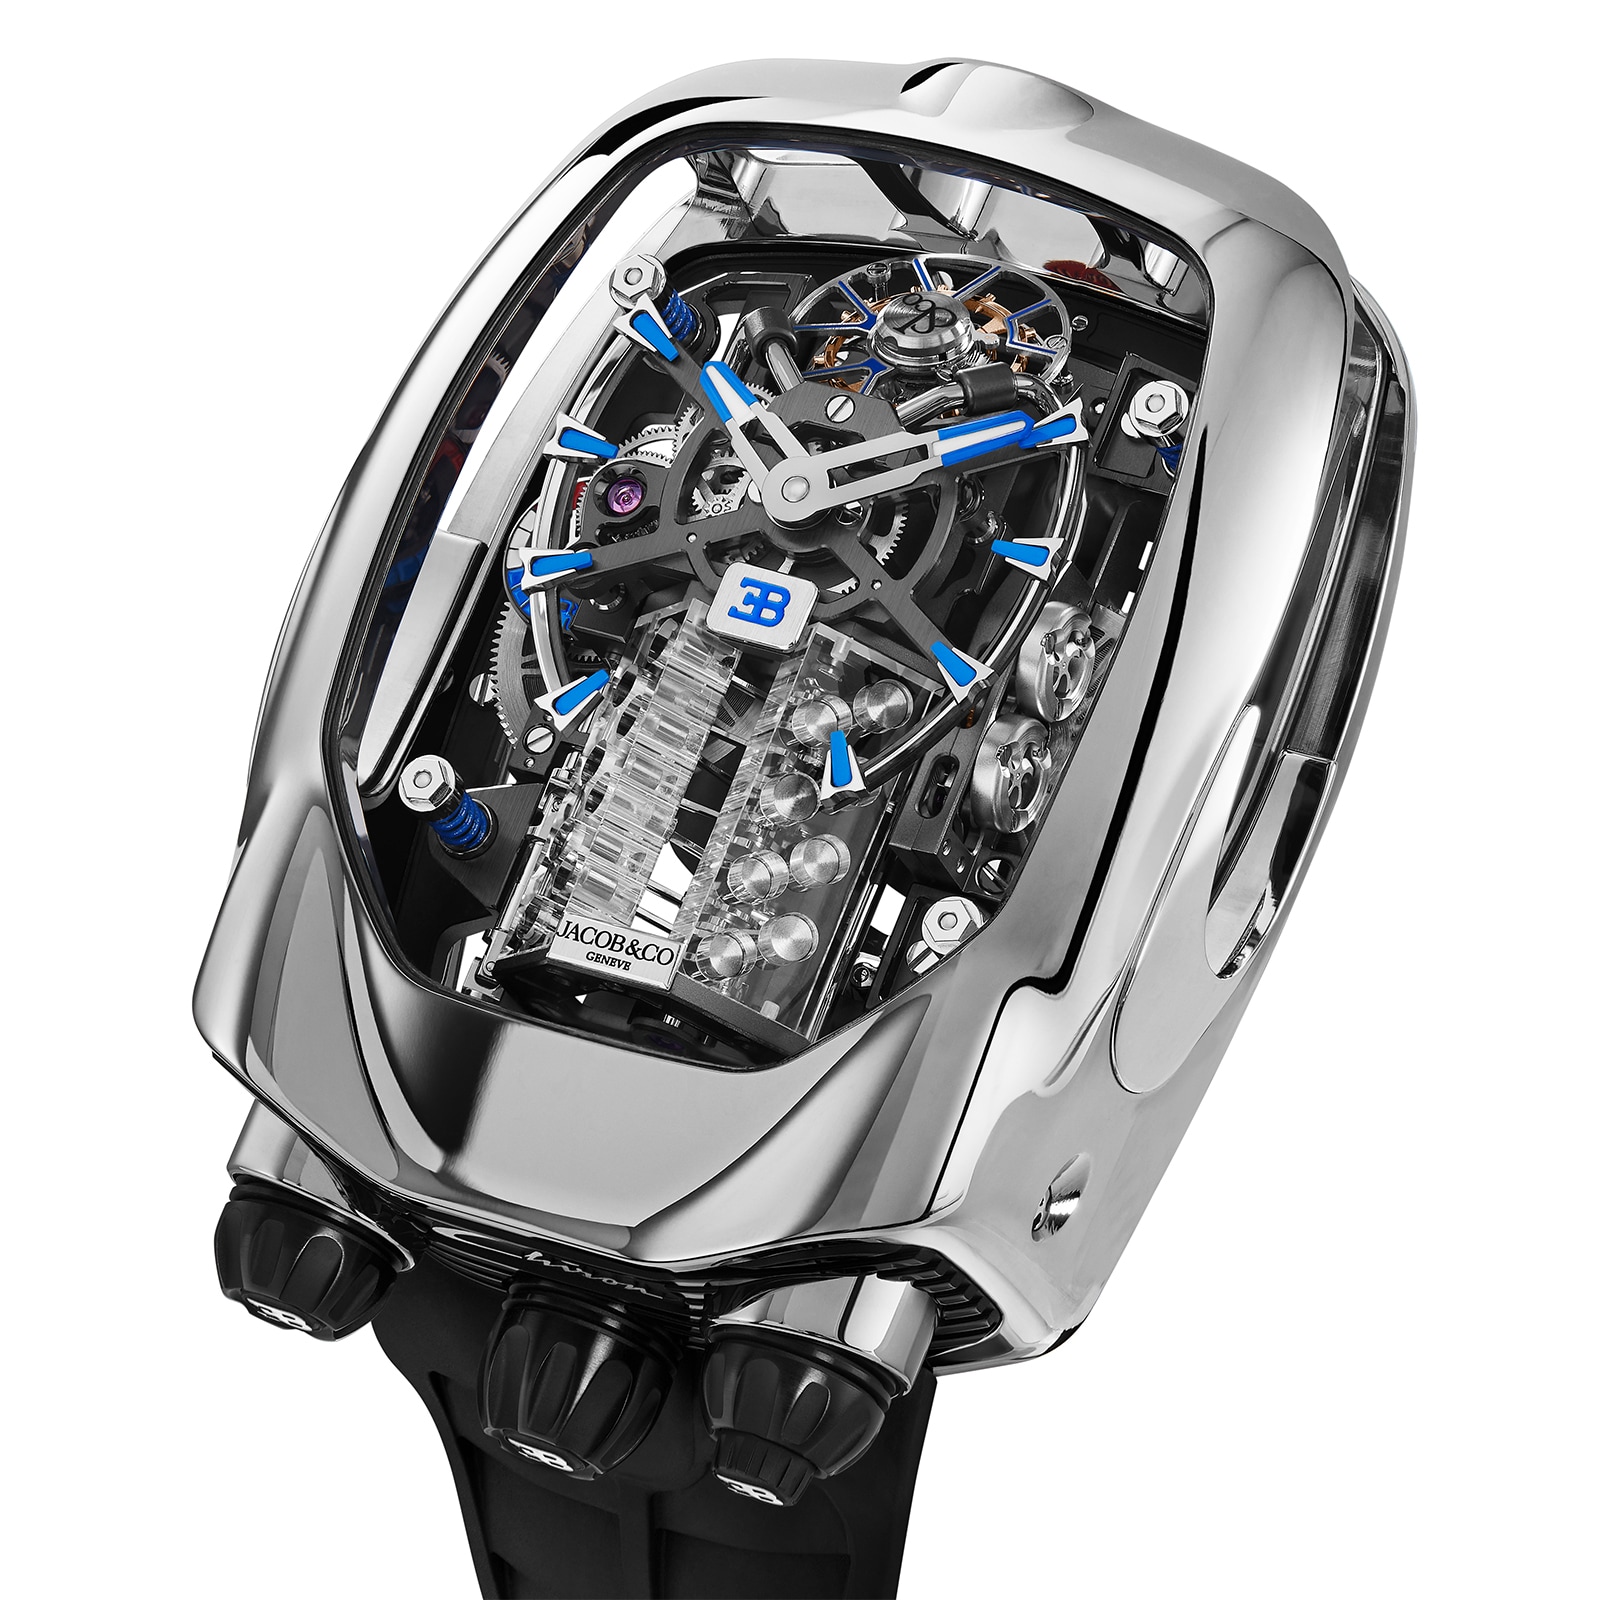 Watch Inspired By Bugatti Chiron Has Working W-16 Cylinder Engine Inside